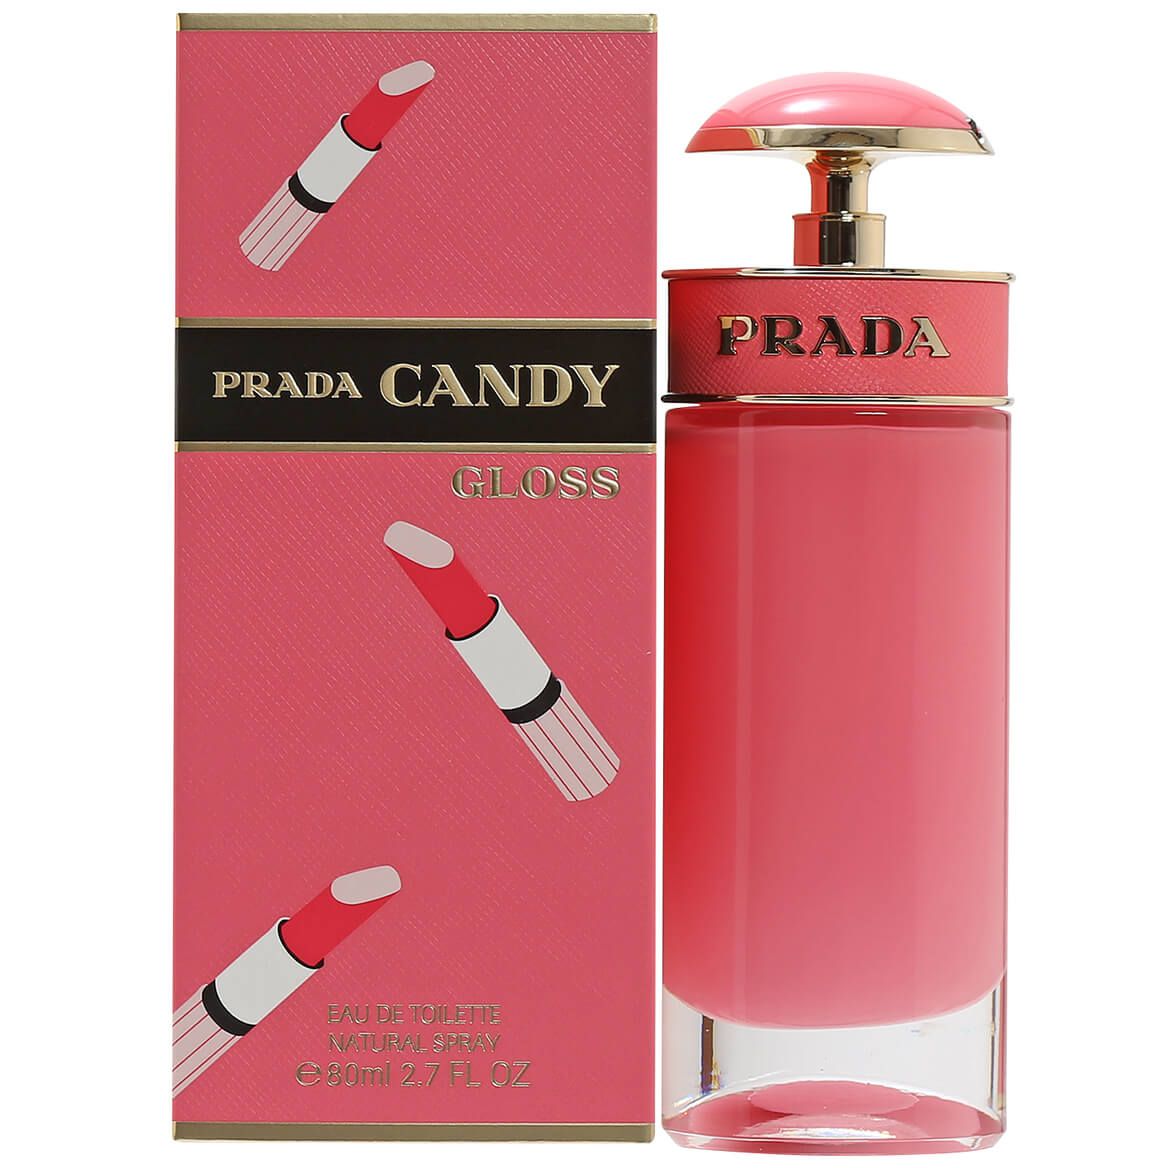 Prada Candy Gloss for Women EDT, 2.7 fl. oz. + '-' + 377287